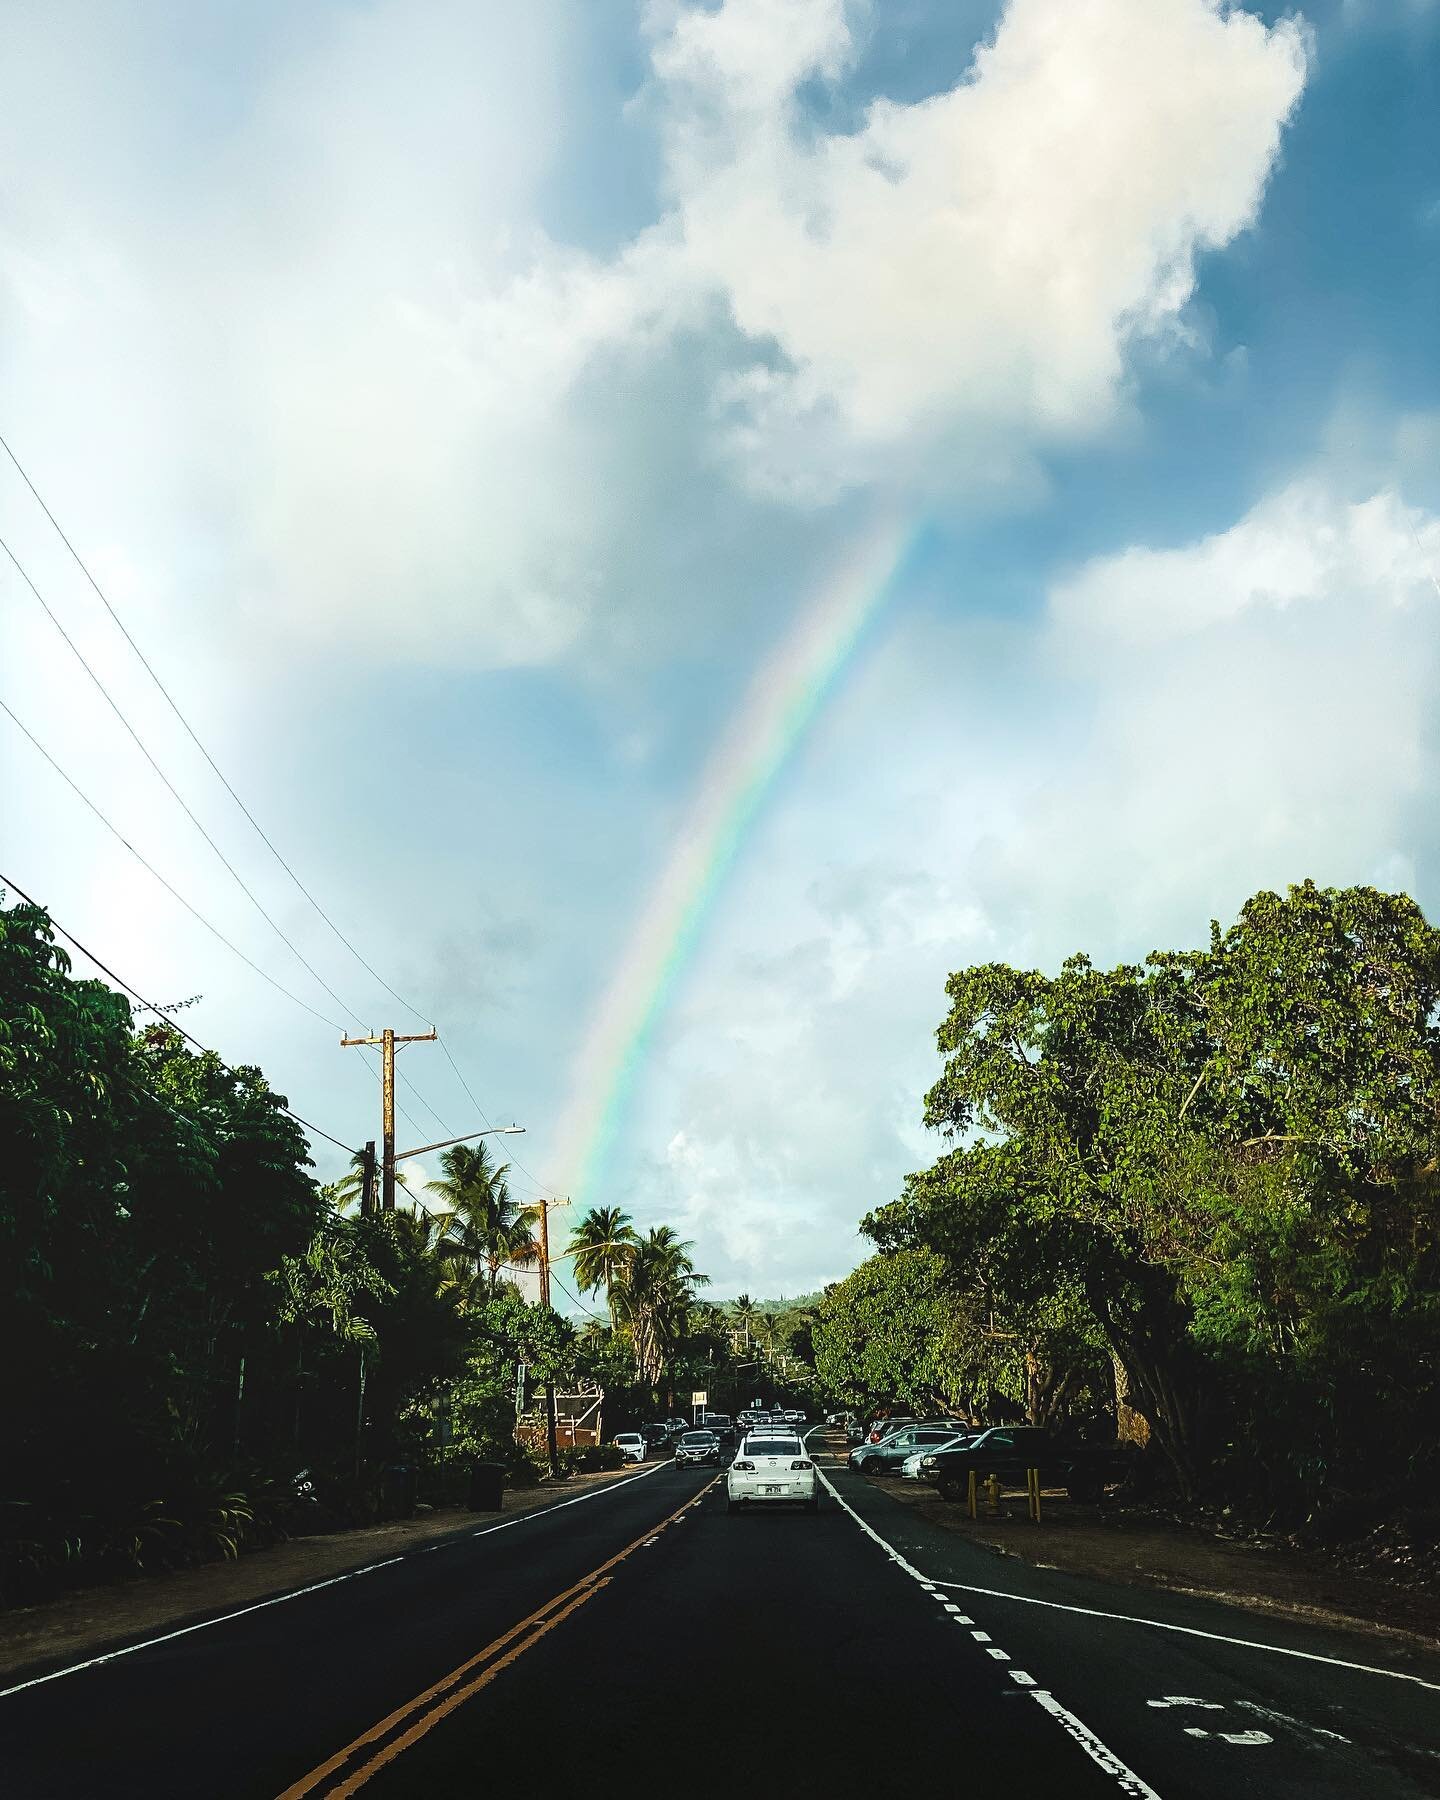 No Rain. No Rainbow. 🌈🌴🤙🏼
.
.
.
.
.
.
#hawaii #rainbow  #oahu #islandlife #aloha #hawaiilife #hawaiiinstagram #islandvibes #hope #hilife #tropicalvibes #paradise #beautiful #explorefeed #colors #zen #peaceful #skyporn #sunset #shotoniphone